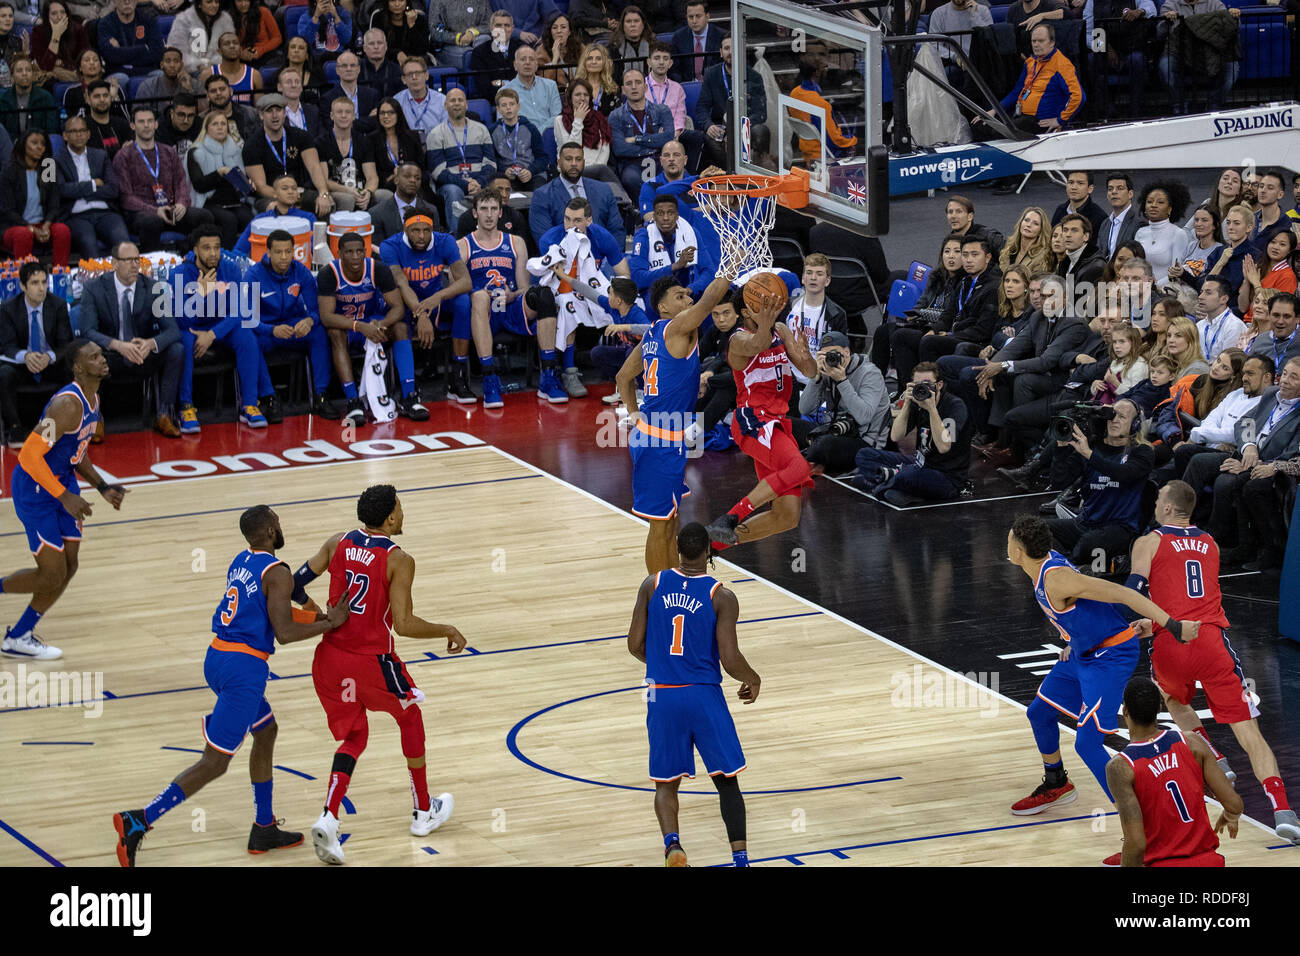 Londres, Royaume-Uni. 17 Jan 2019. Londres 2019 jeu NBA Washington Wizards vs. New York Knicks à l'O2 Arena, UK, Crédit : Jason Richardson/Alamy Live News Banque D'Images